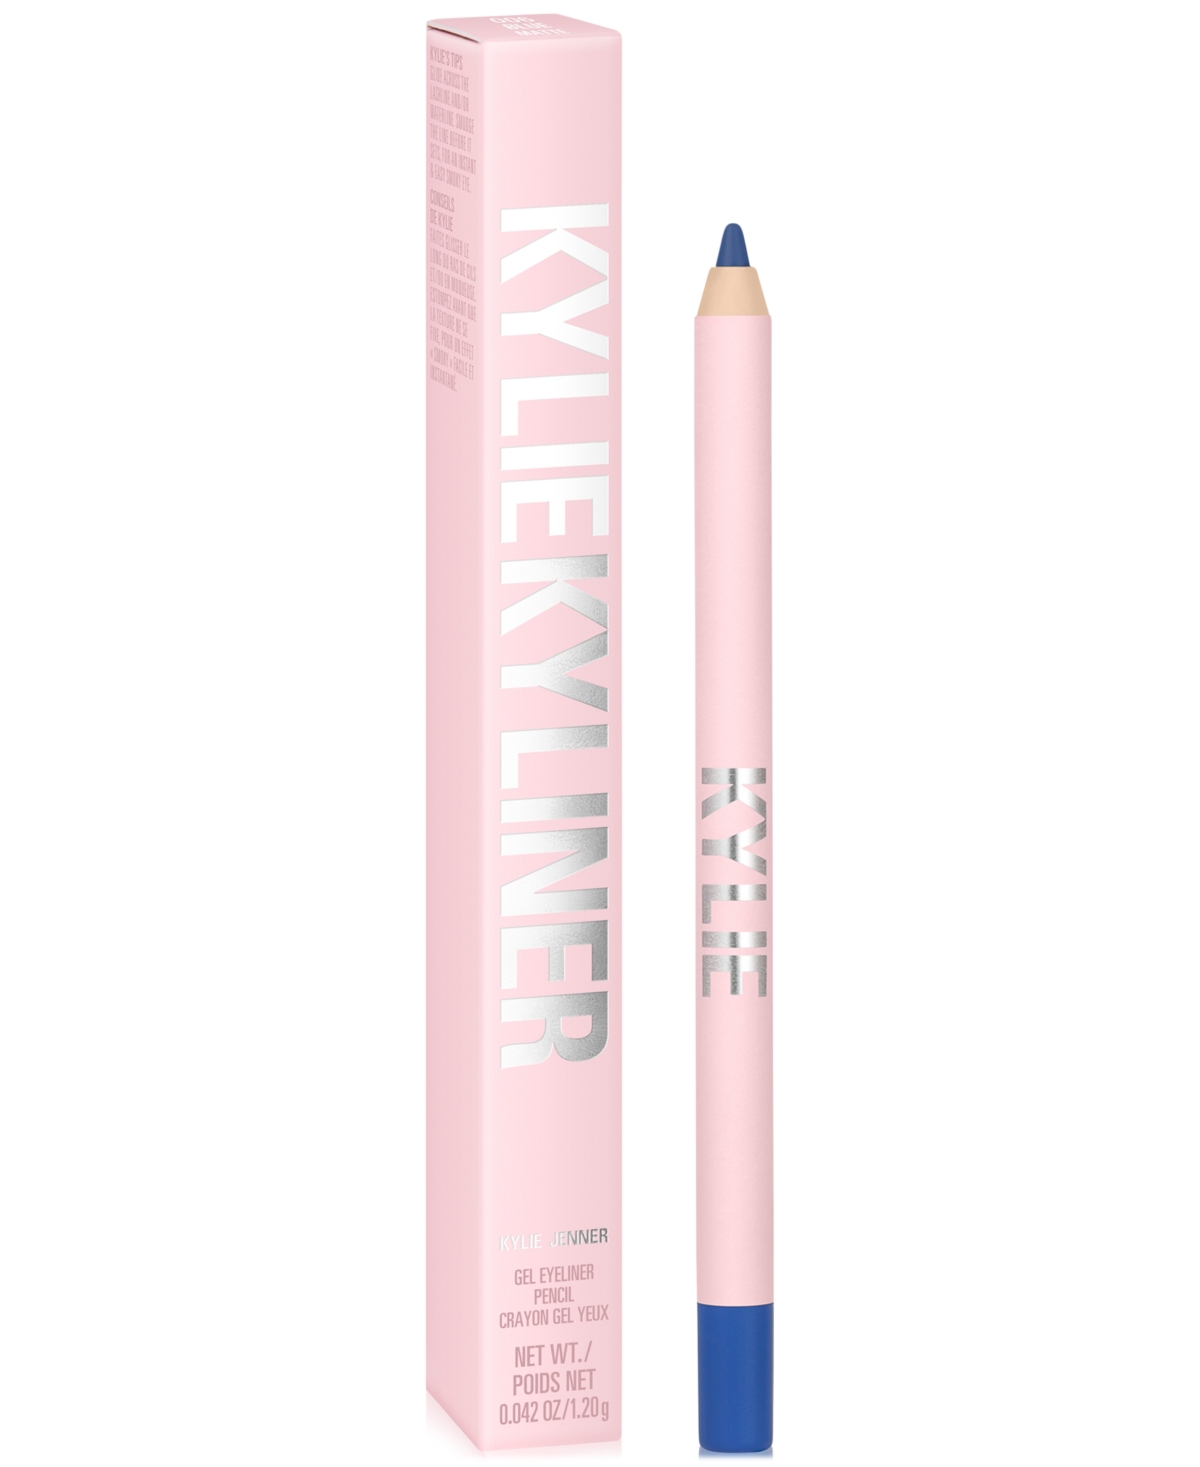 Kylie Cosmetics Kyliner Gel Eyeliner Pencil In Matte Blue